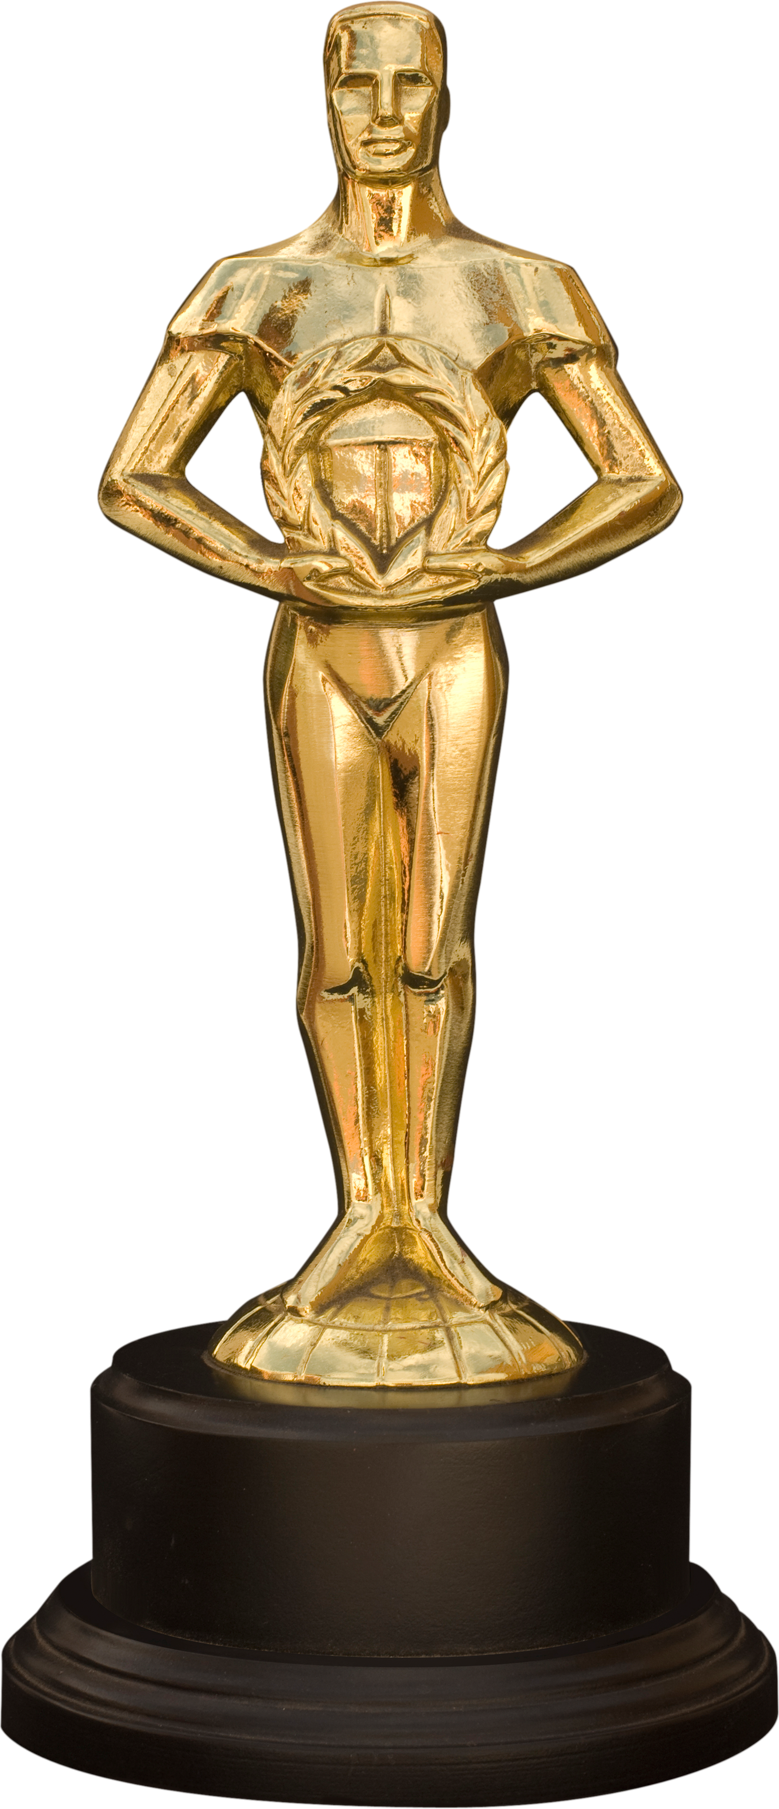 Golden Award PNG Transparent Picture